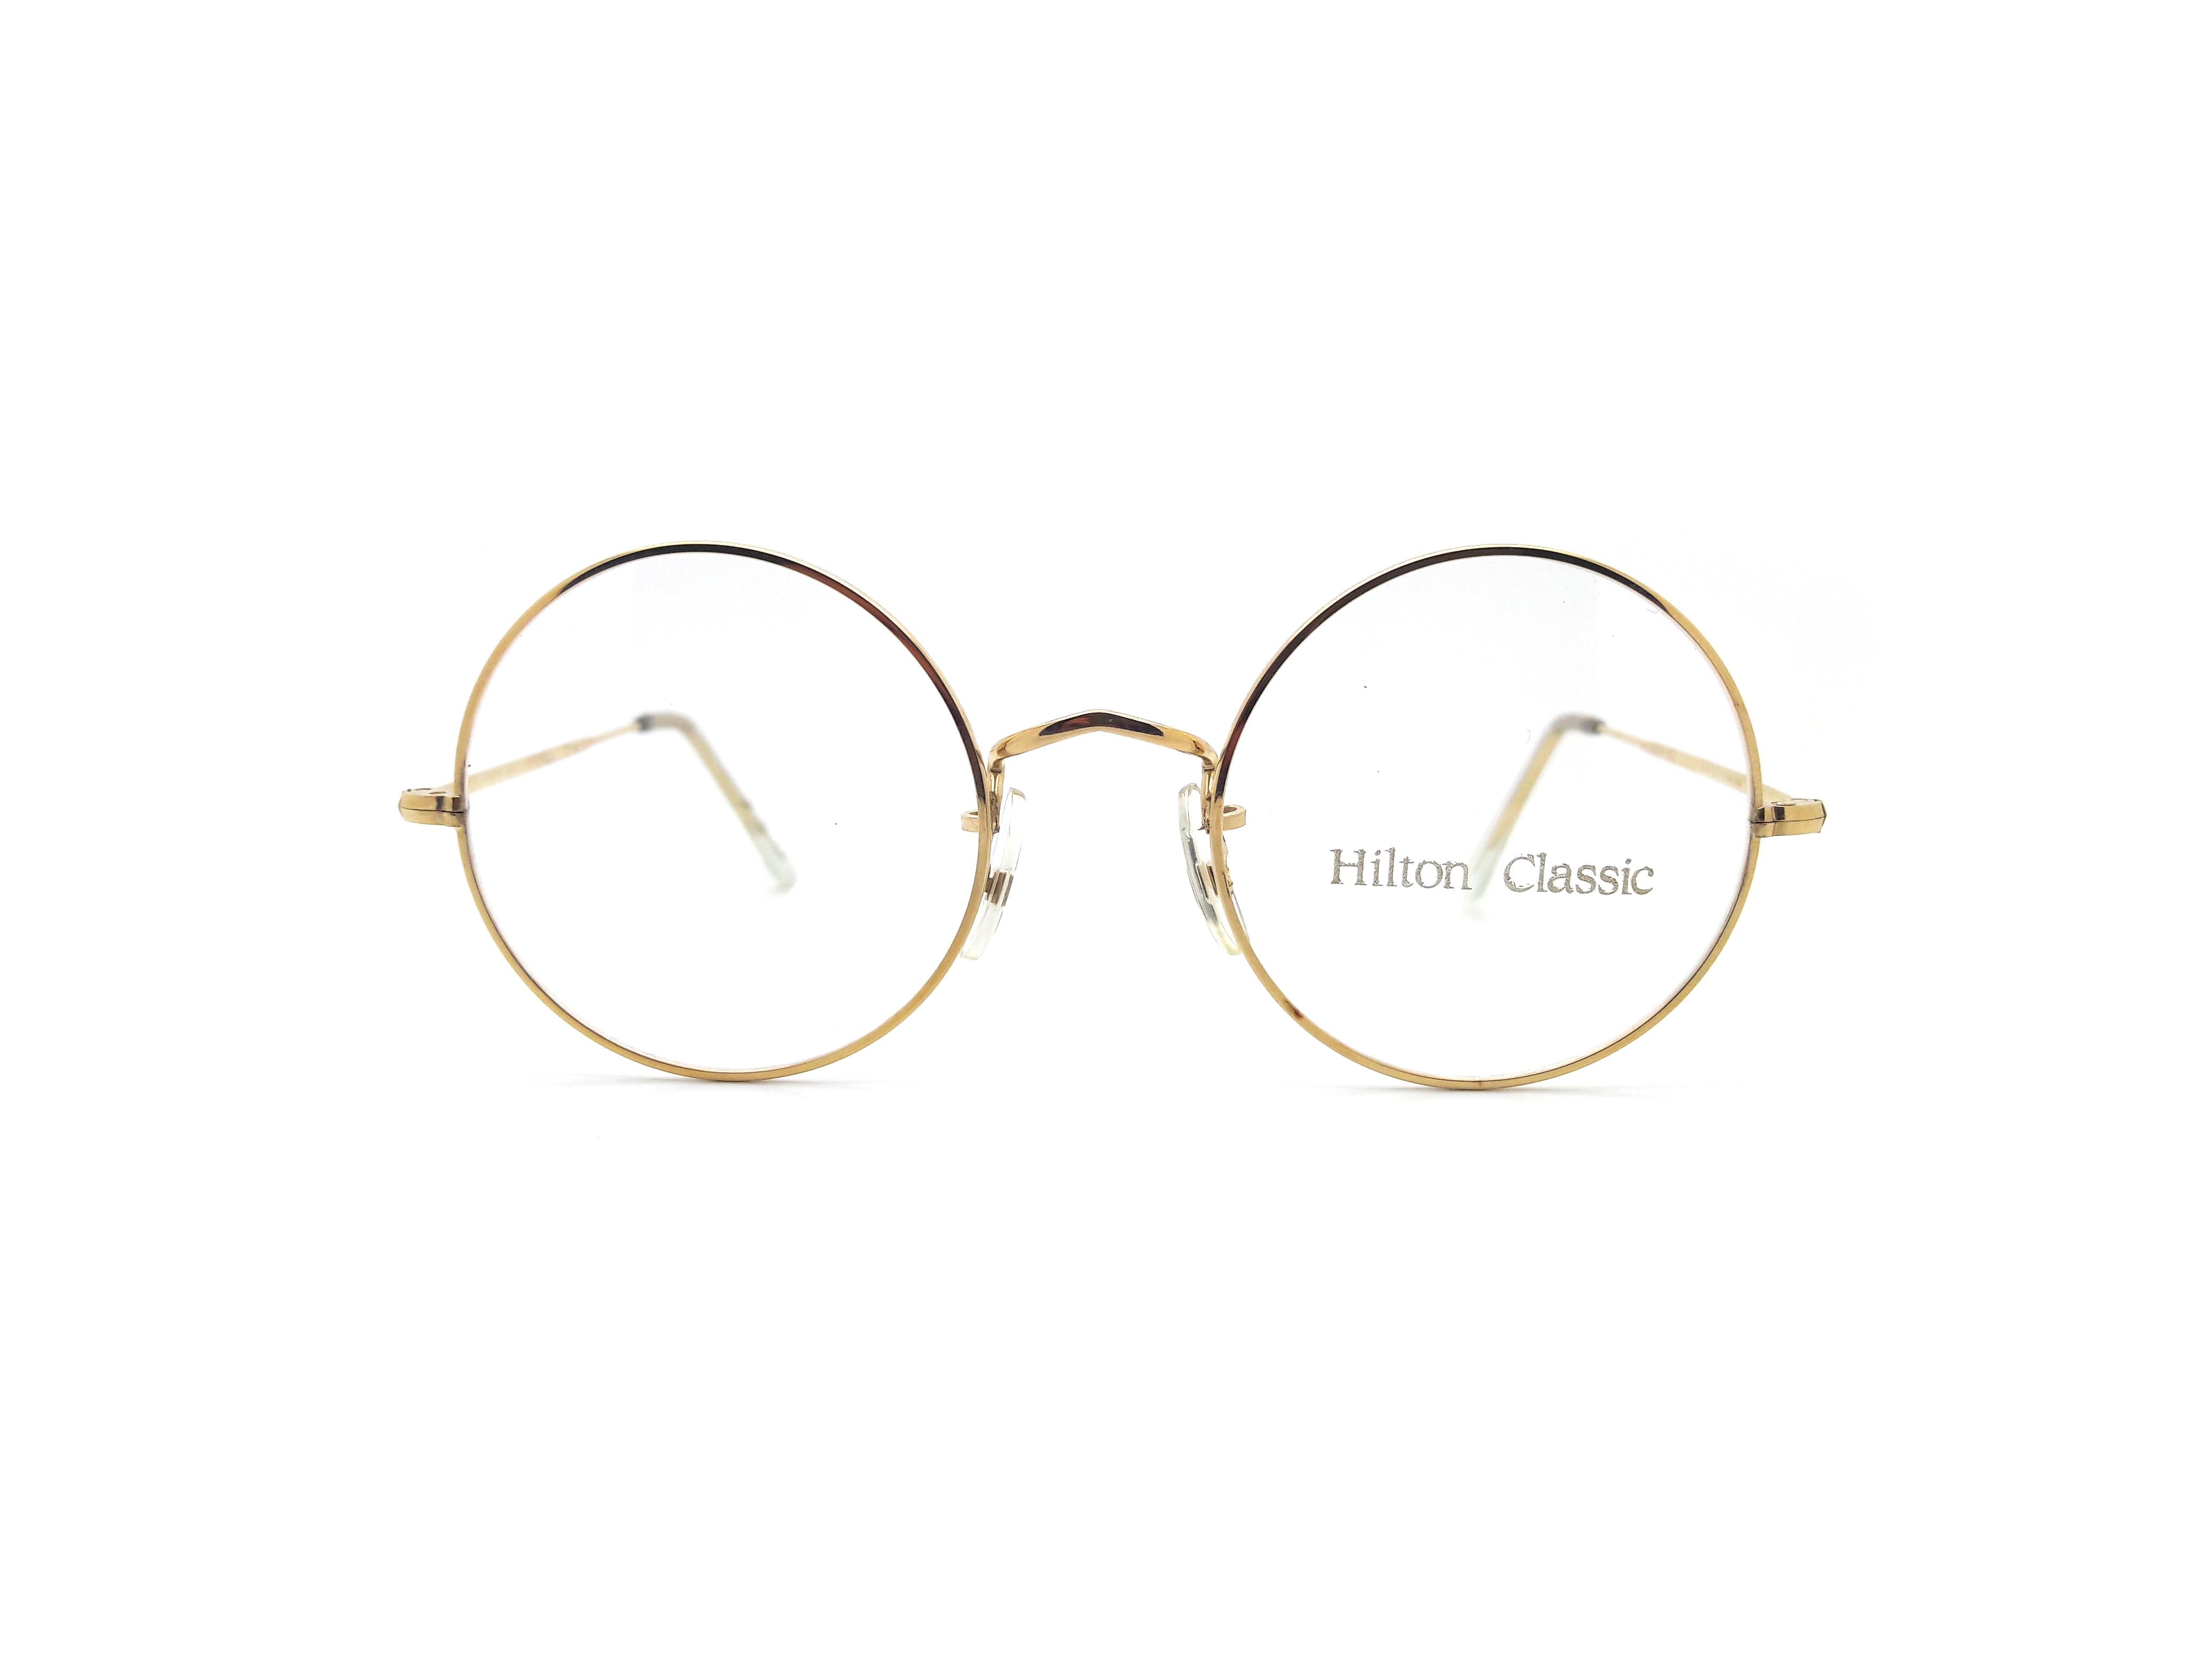 Hilton Classic 2 14K Rolled Gold Vintage Round Eyeglasses – Ed 